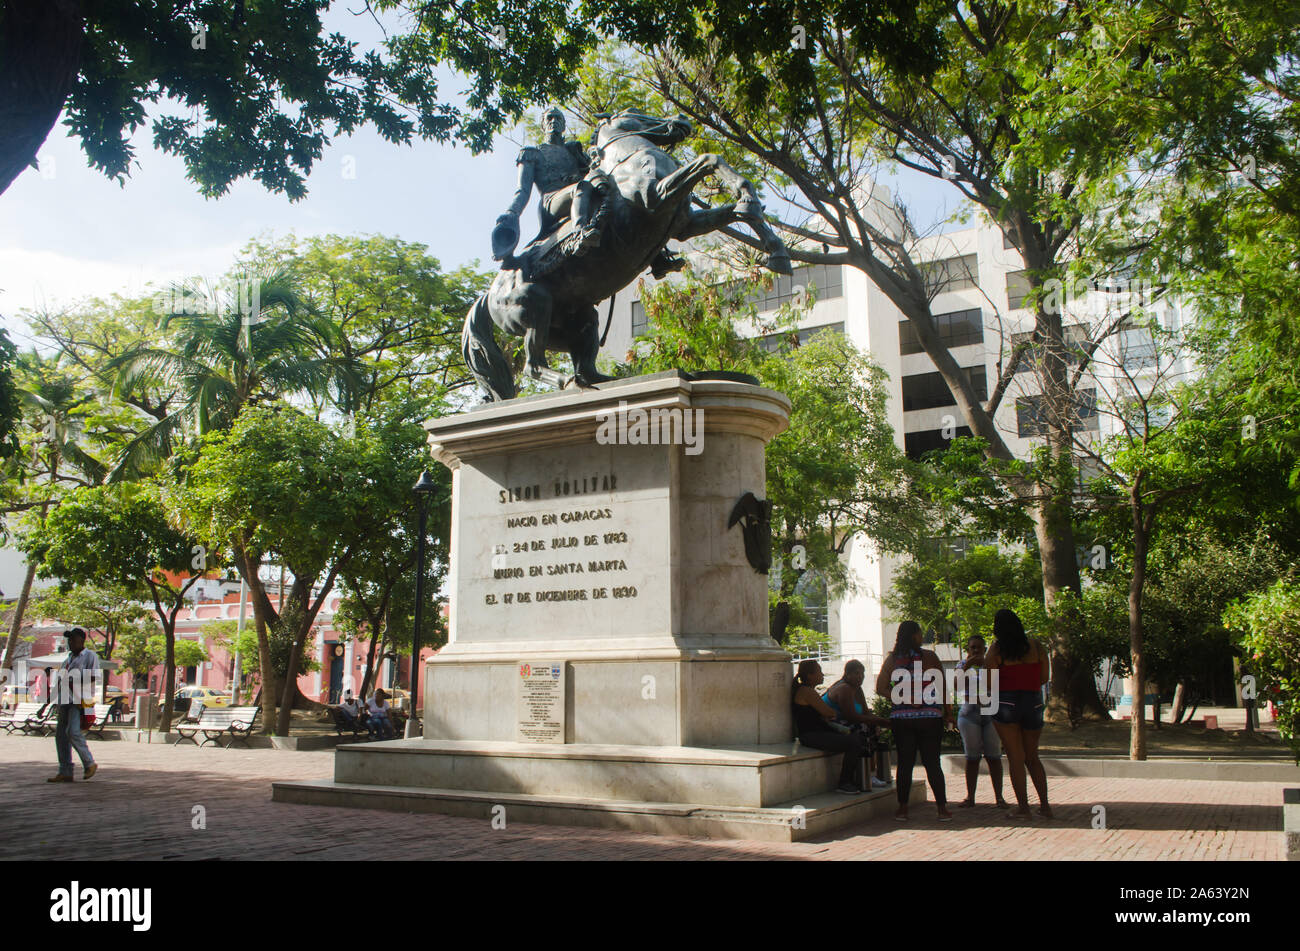 Equestrian statue of Simón Bolívar in Santa Marta. This statue portrays Bolívar on horseback, symbolizing his leadership and contributions. Stock Photo